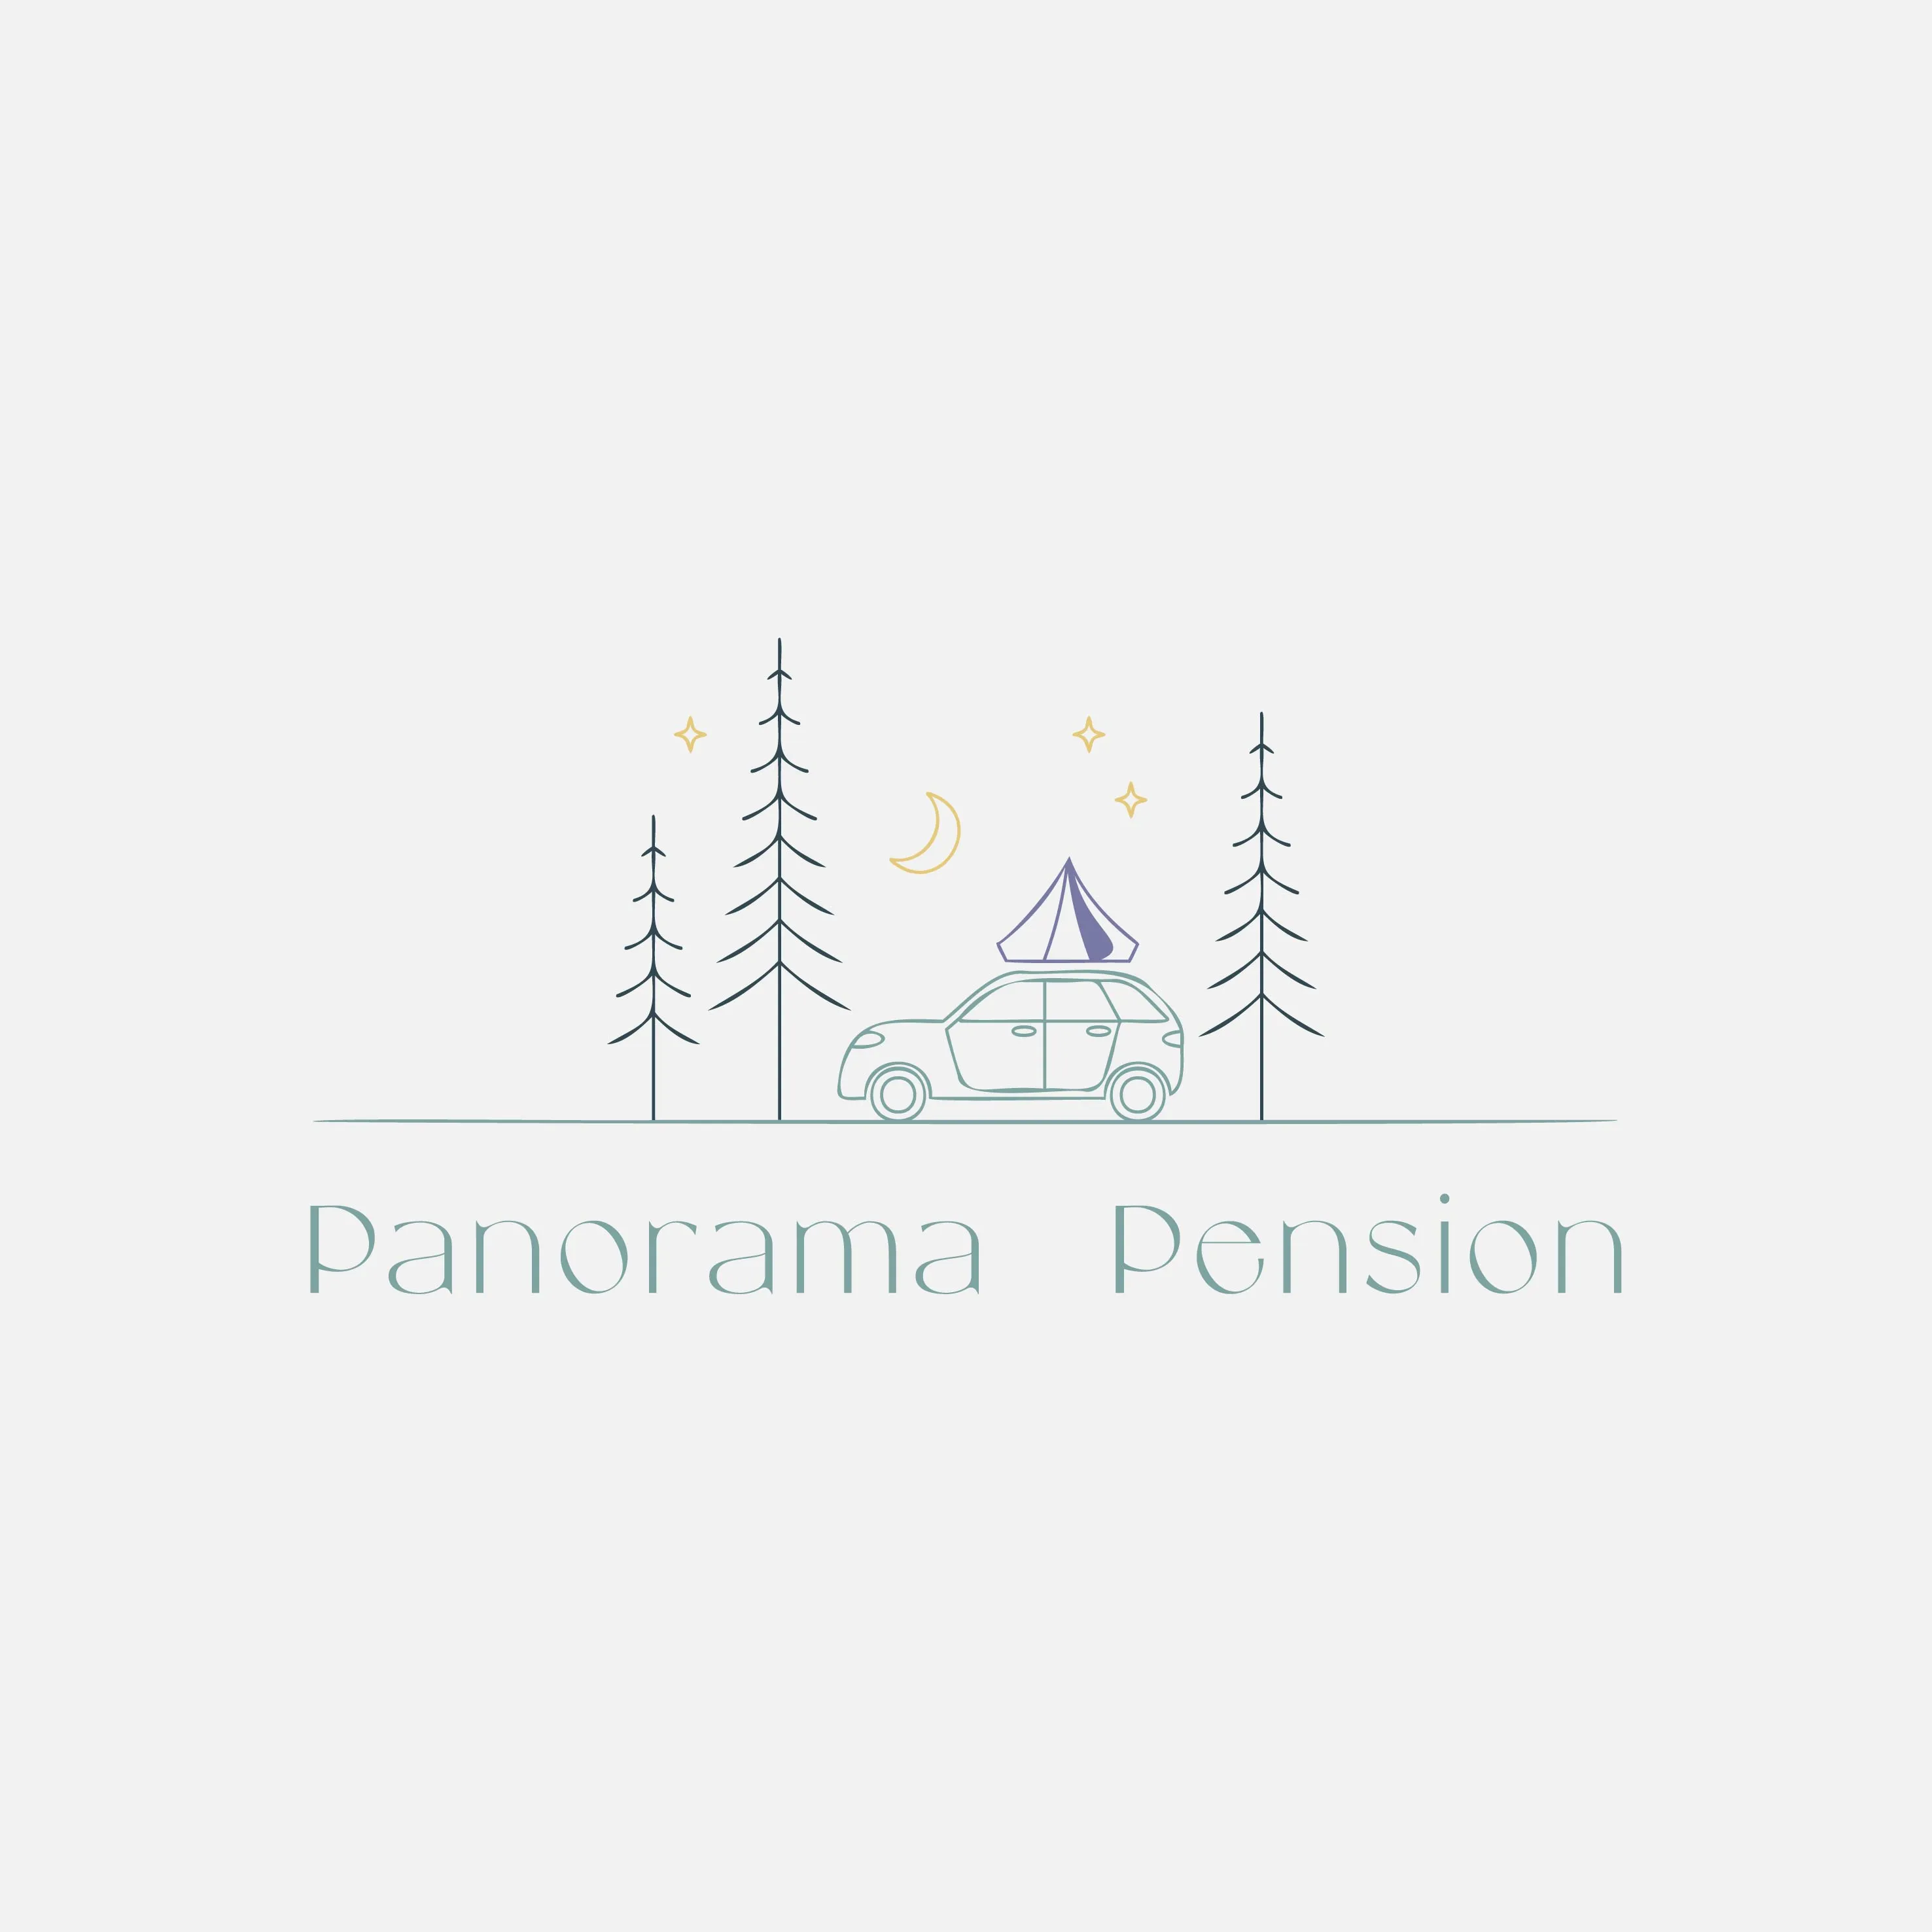 Panorama Pension